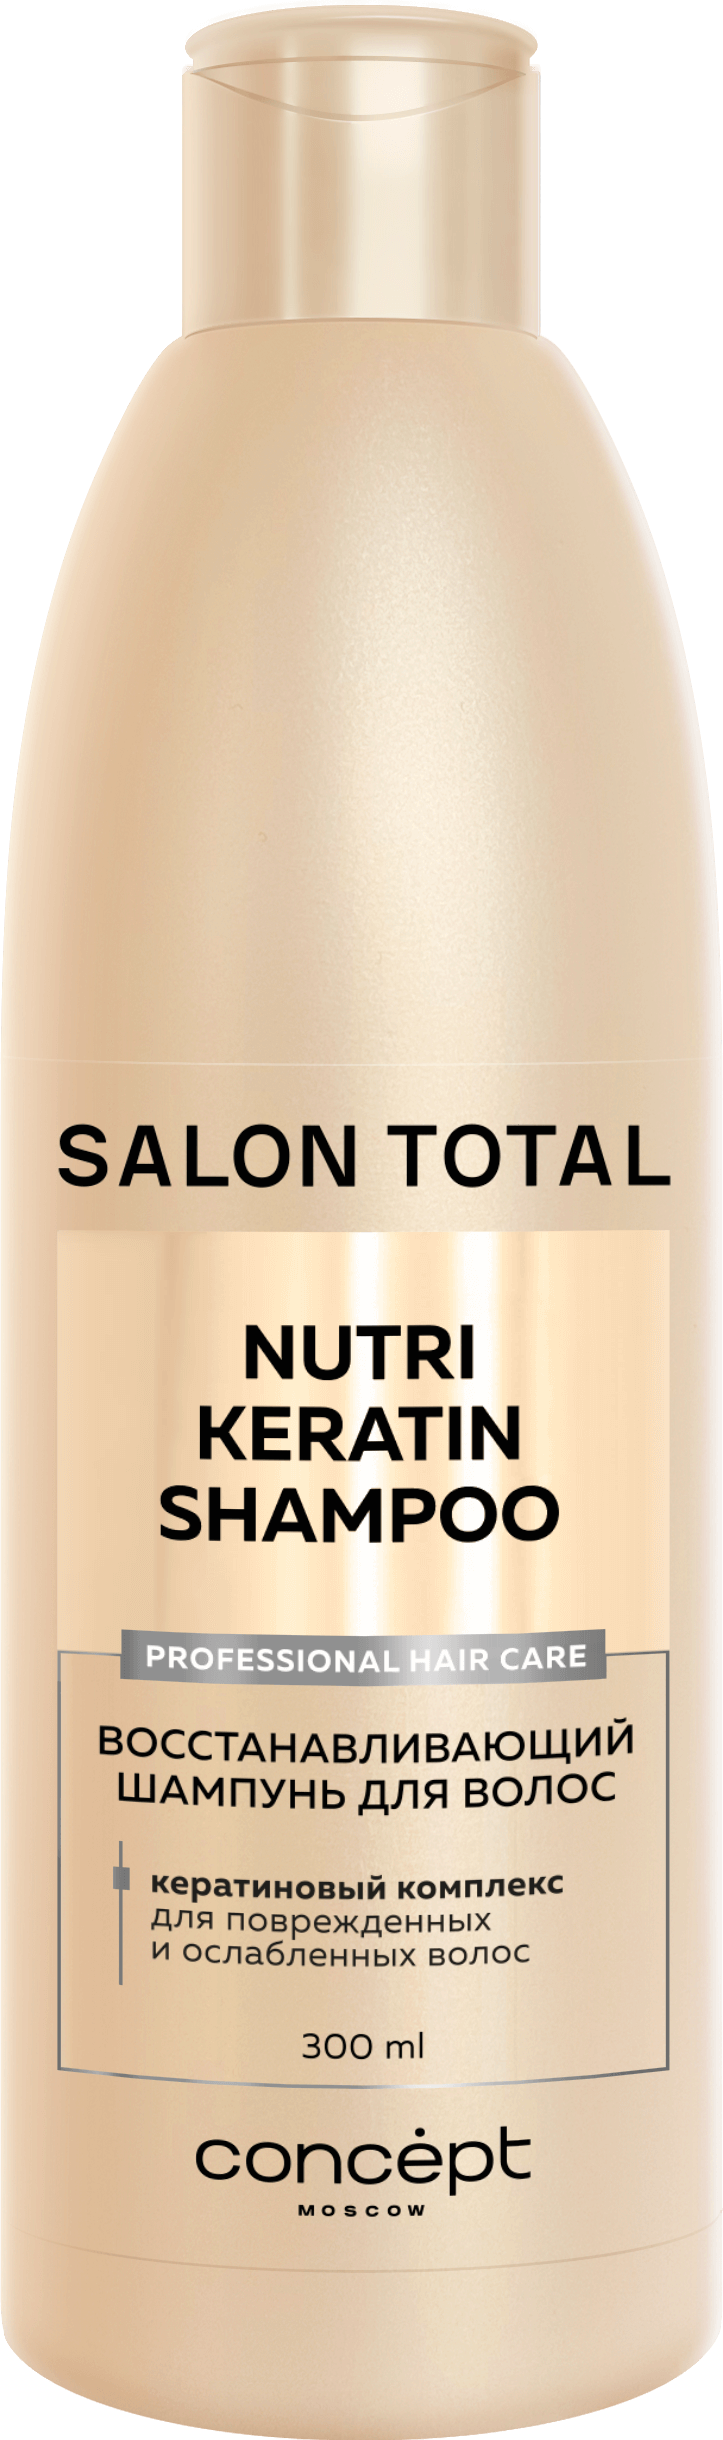 Salon Total Шампунь для восстановления волос Nutri Keratin shampoo 300 мл